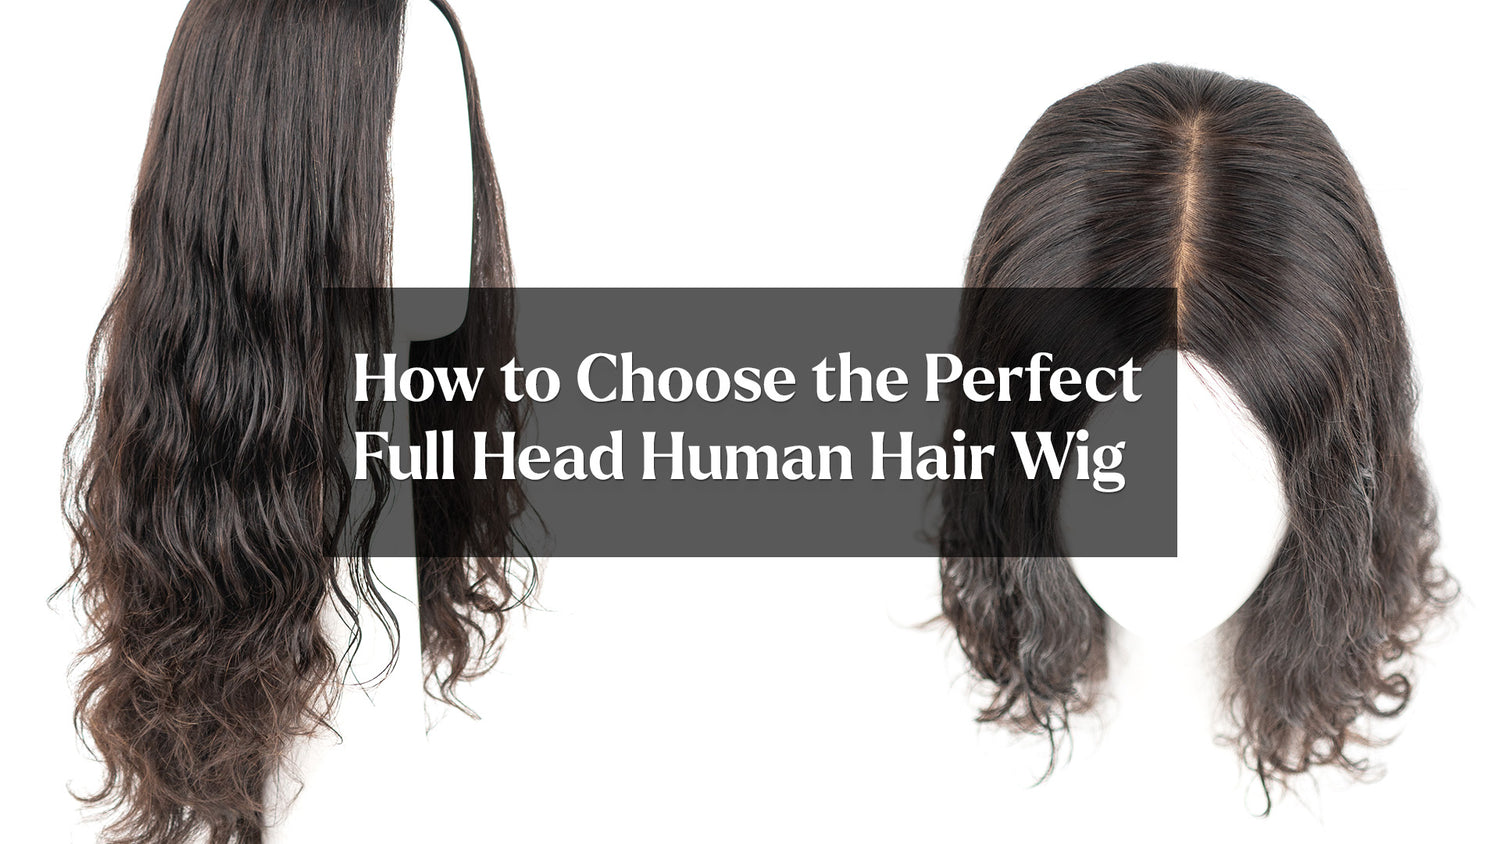 Choosing the Perfect Full Head Human Hair Wig: Factors to Consider